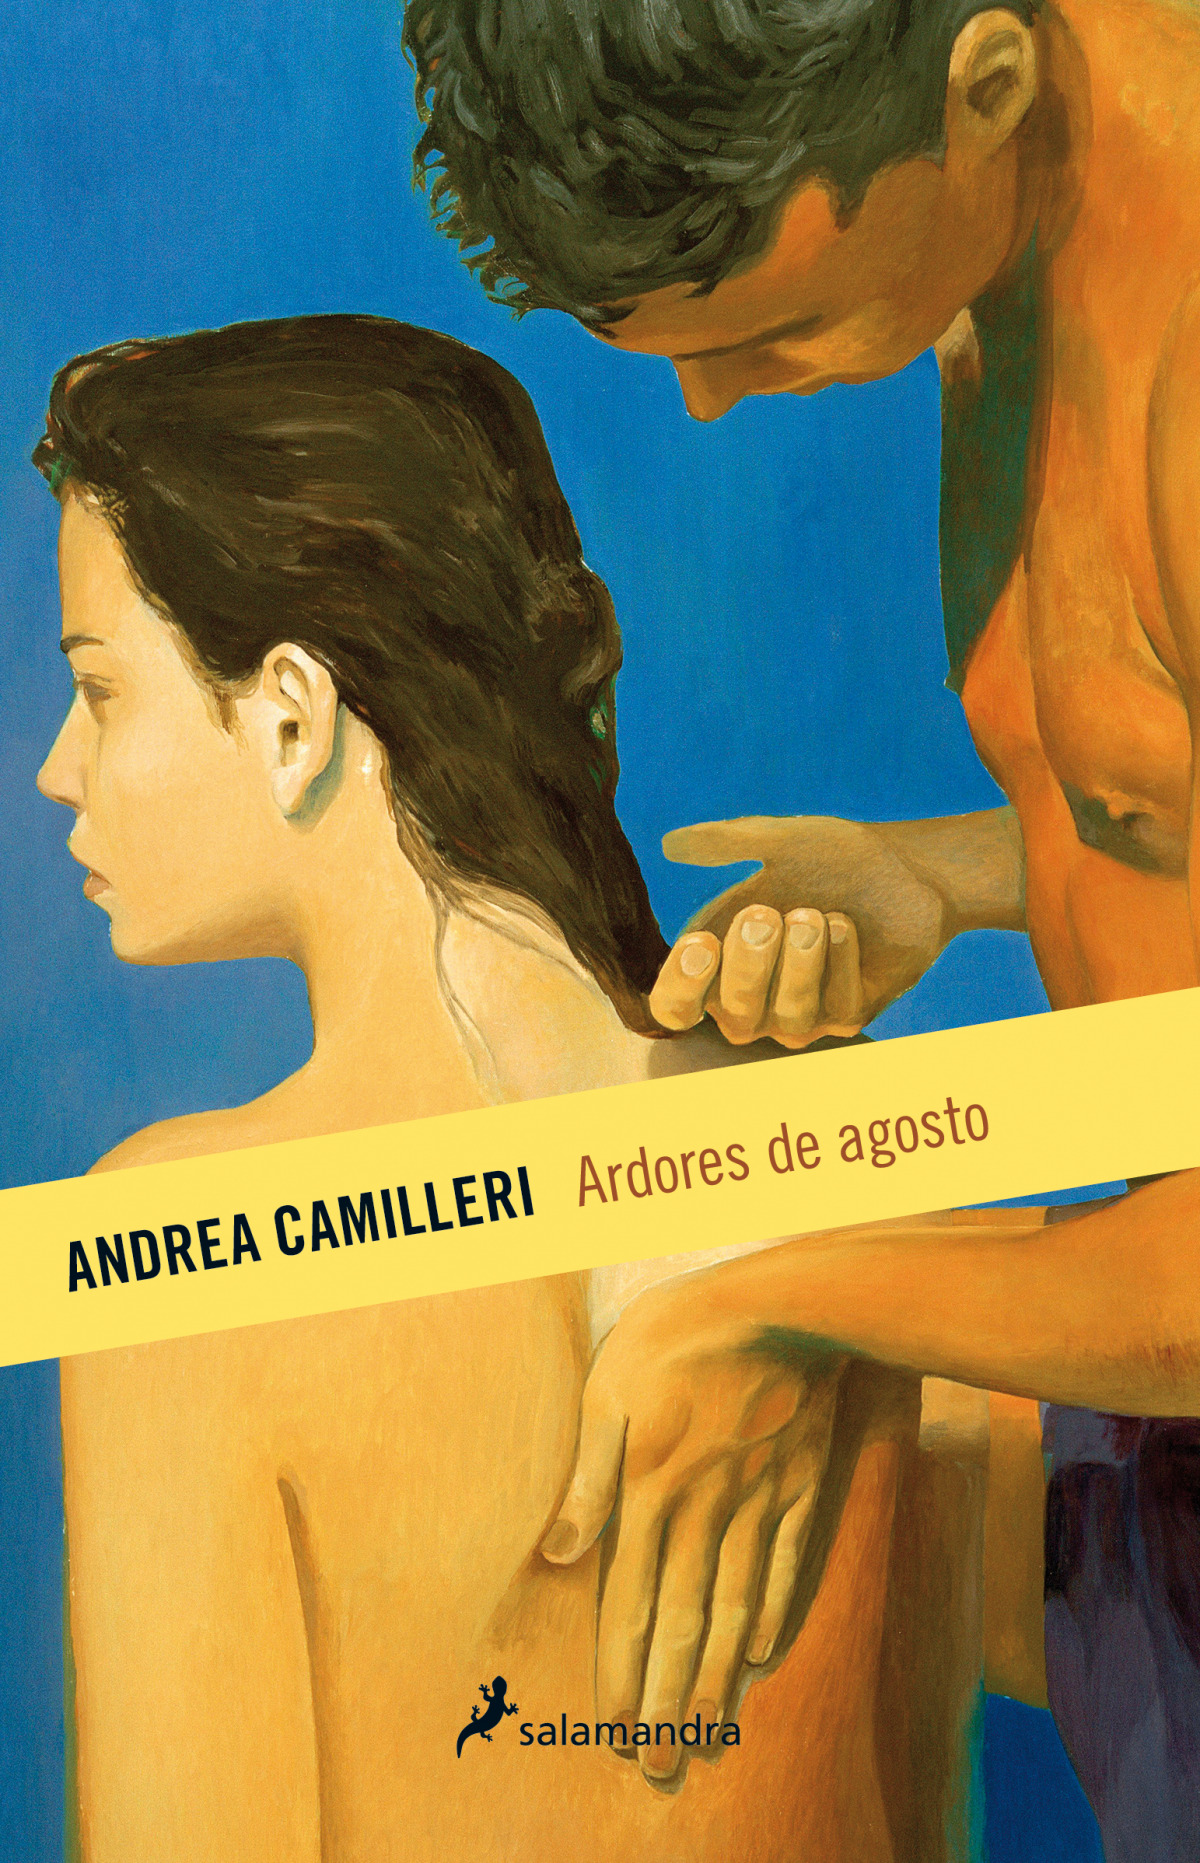 Ardores de Agosto - Camilleri, Andrea